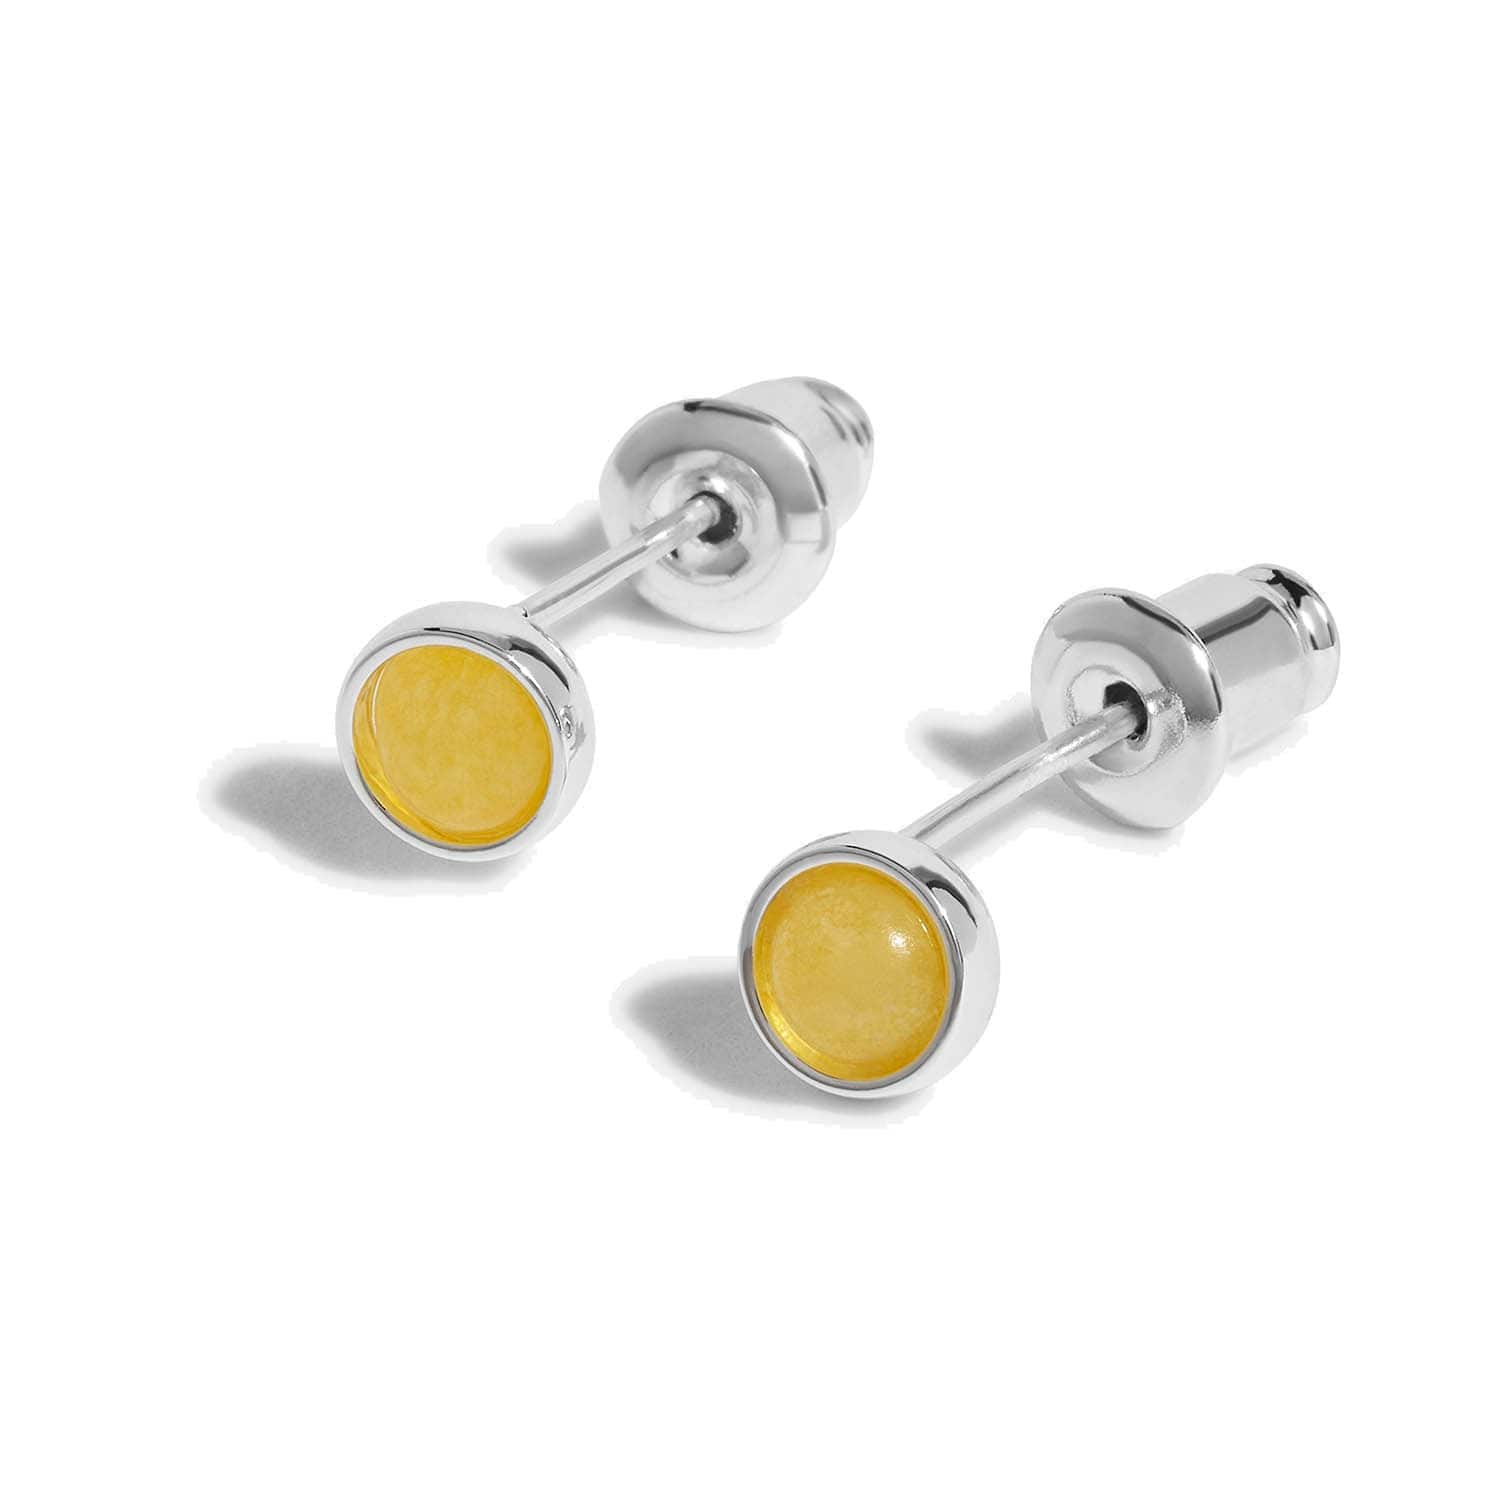 Joma Jewellery Boxed Earrings Joma Jewellery Birthstone Boxed Earrings - November - Yellow Quartz